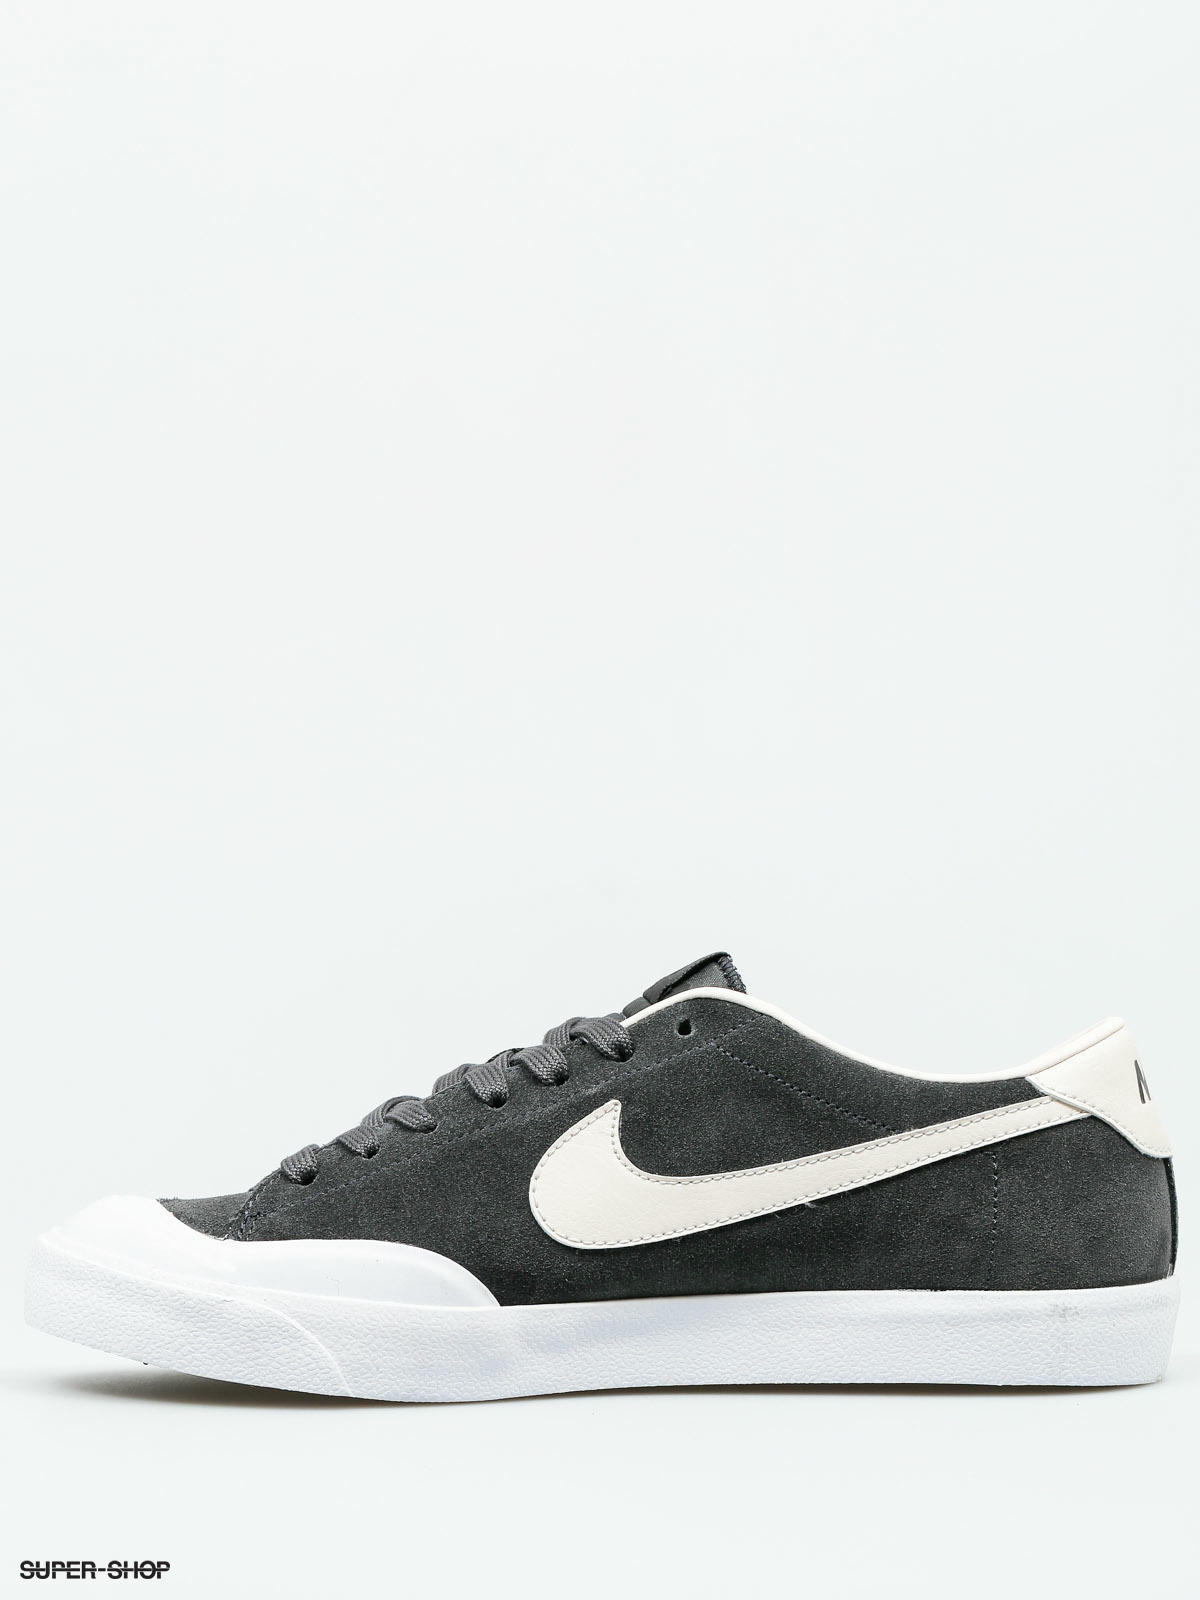 comodidad Rebotar Rebajar Nike SB Shoes Zoom All Court Ck (anthracite/phantom white black)